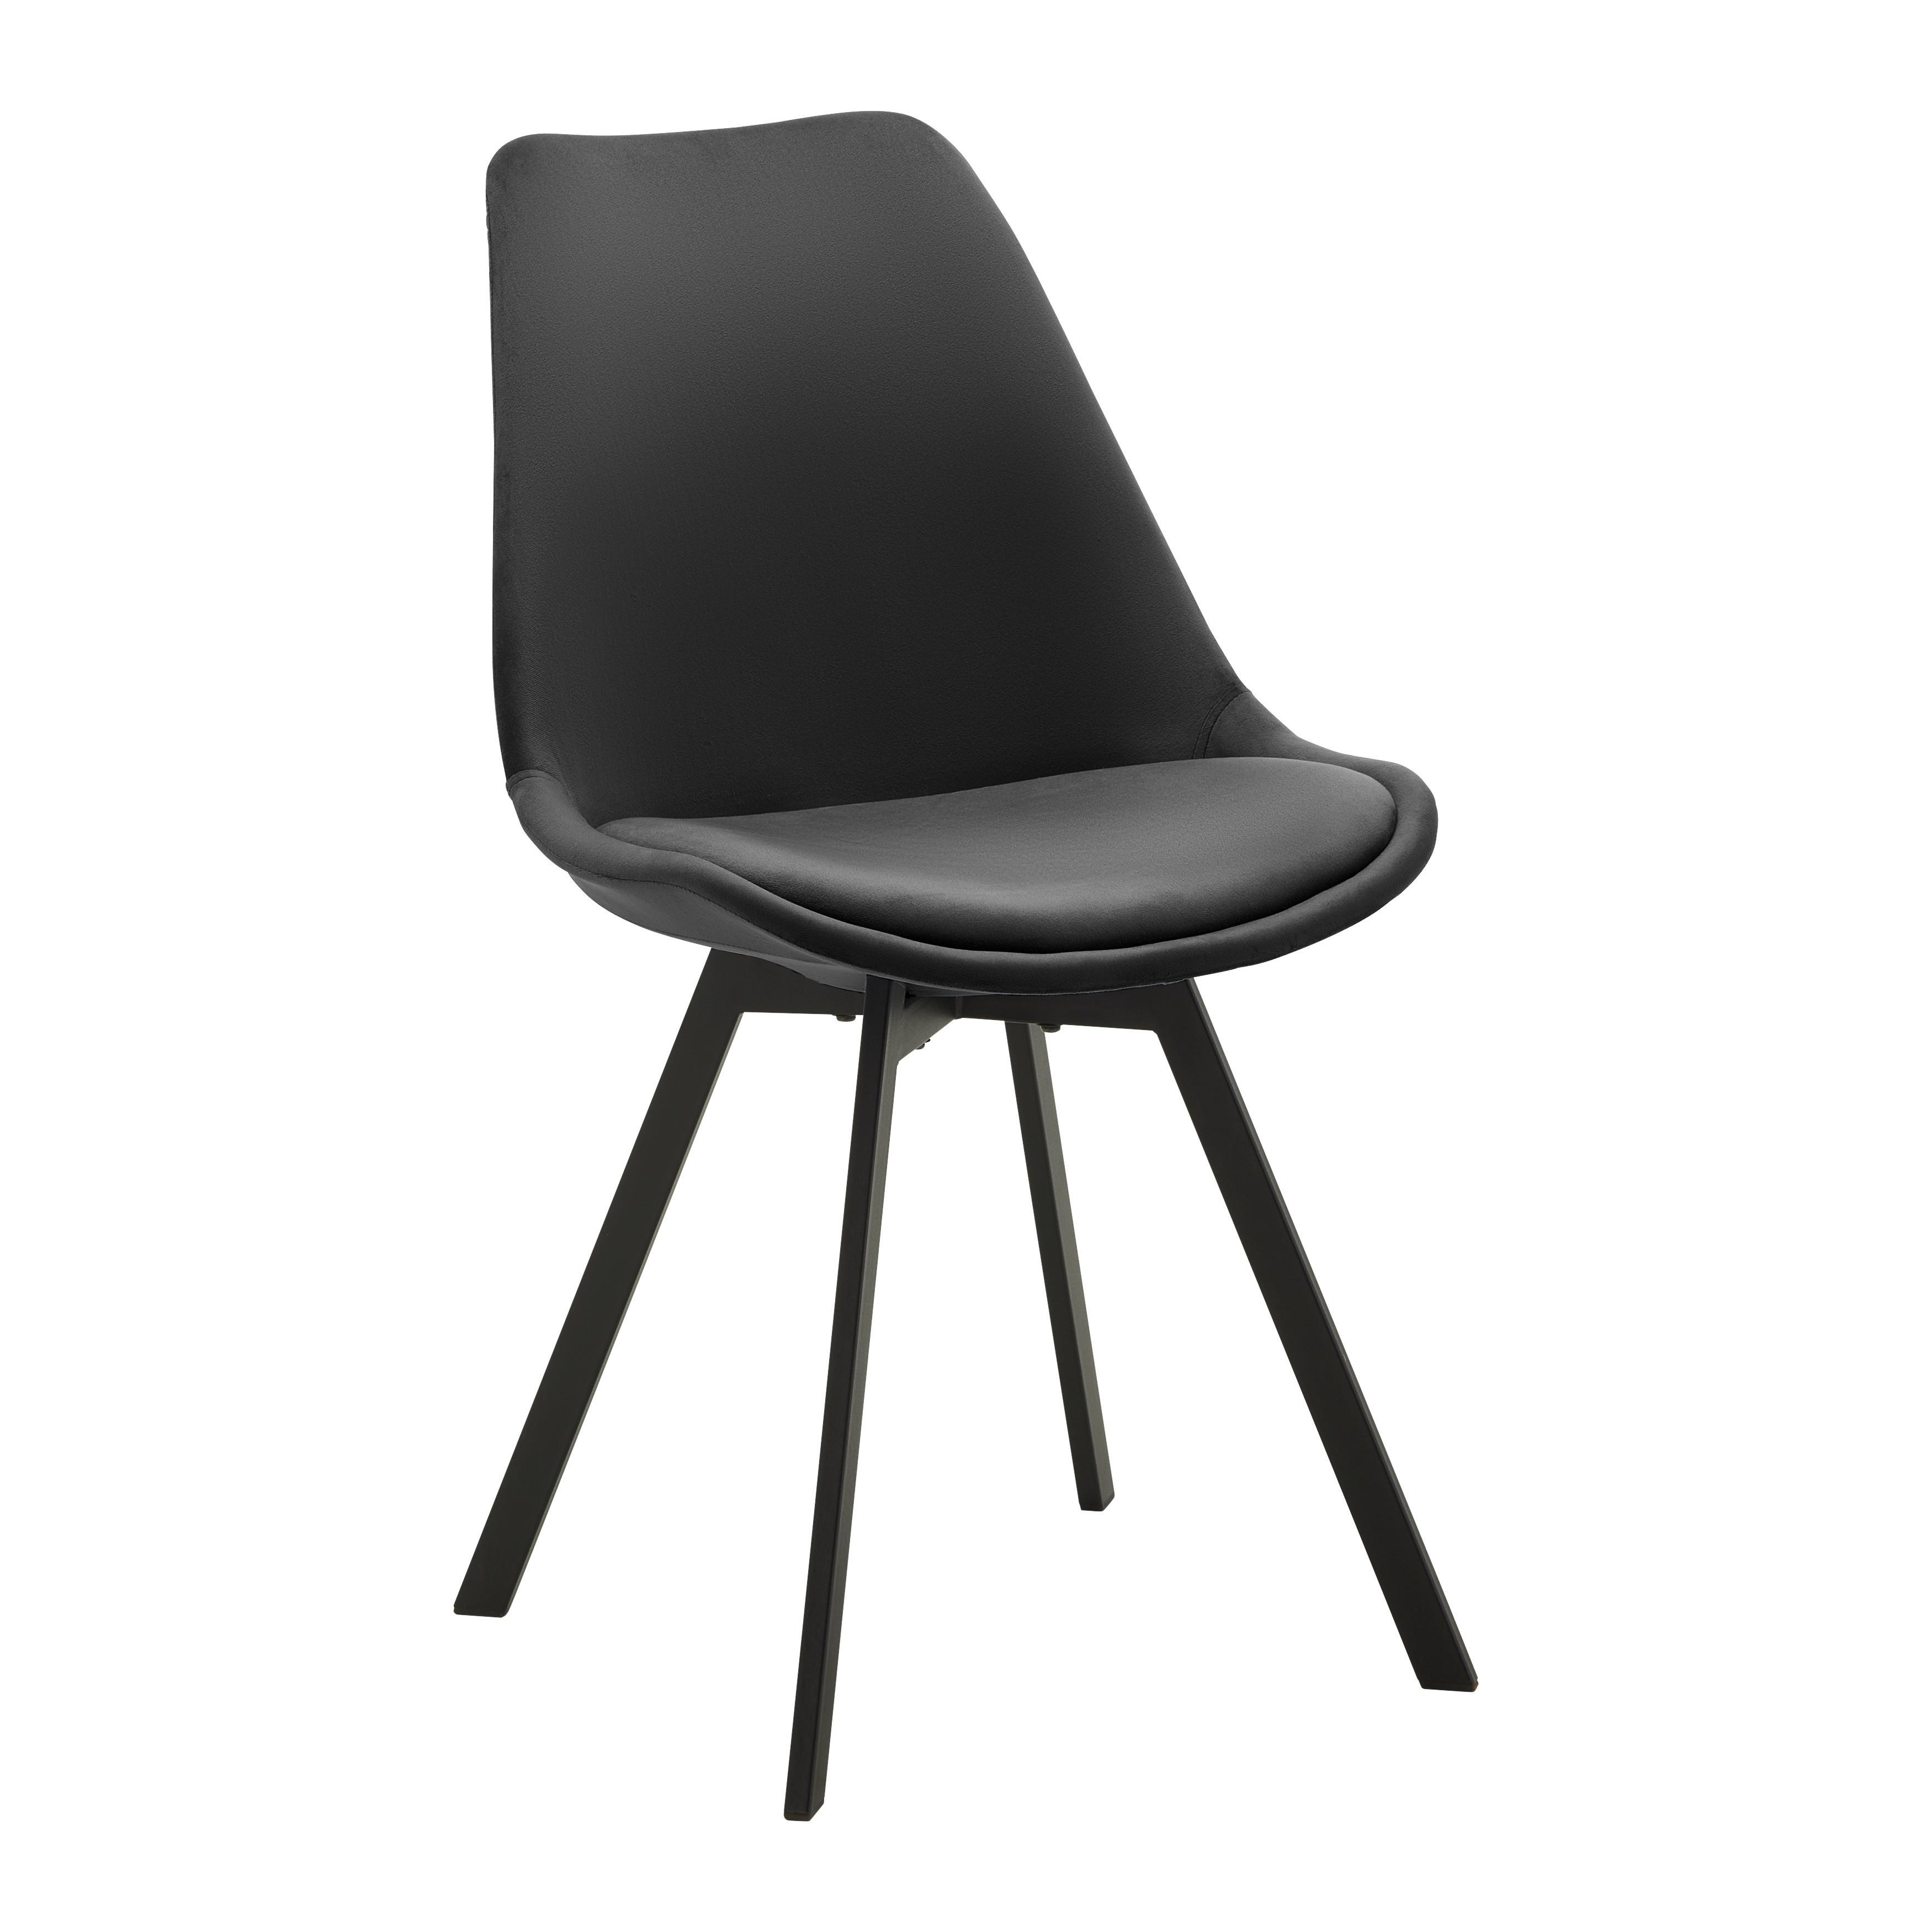 Židle Ze Sametu Mia - Černá - černá, Moderní, kov/textil (45/84/55cm) - P & B